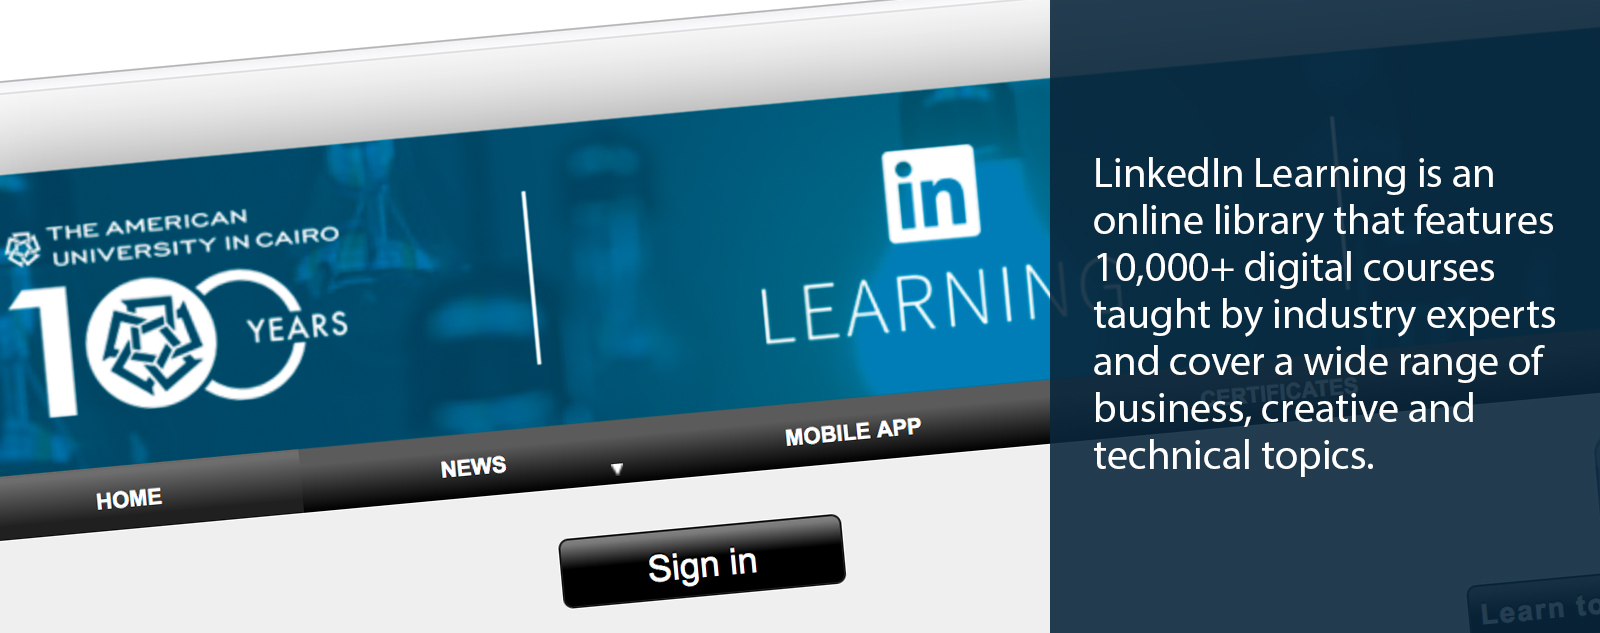 linkedin learning for business